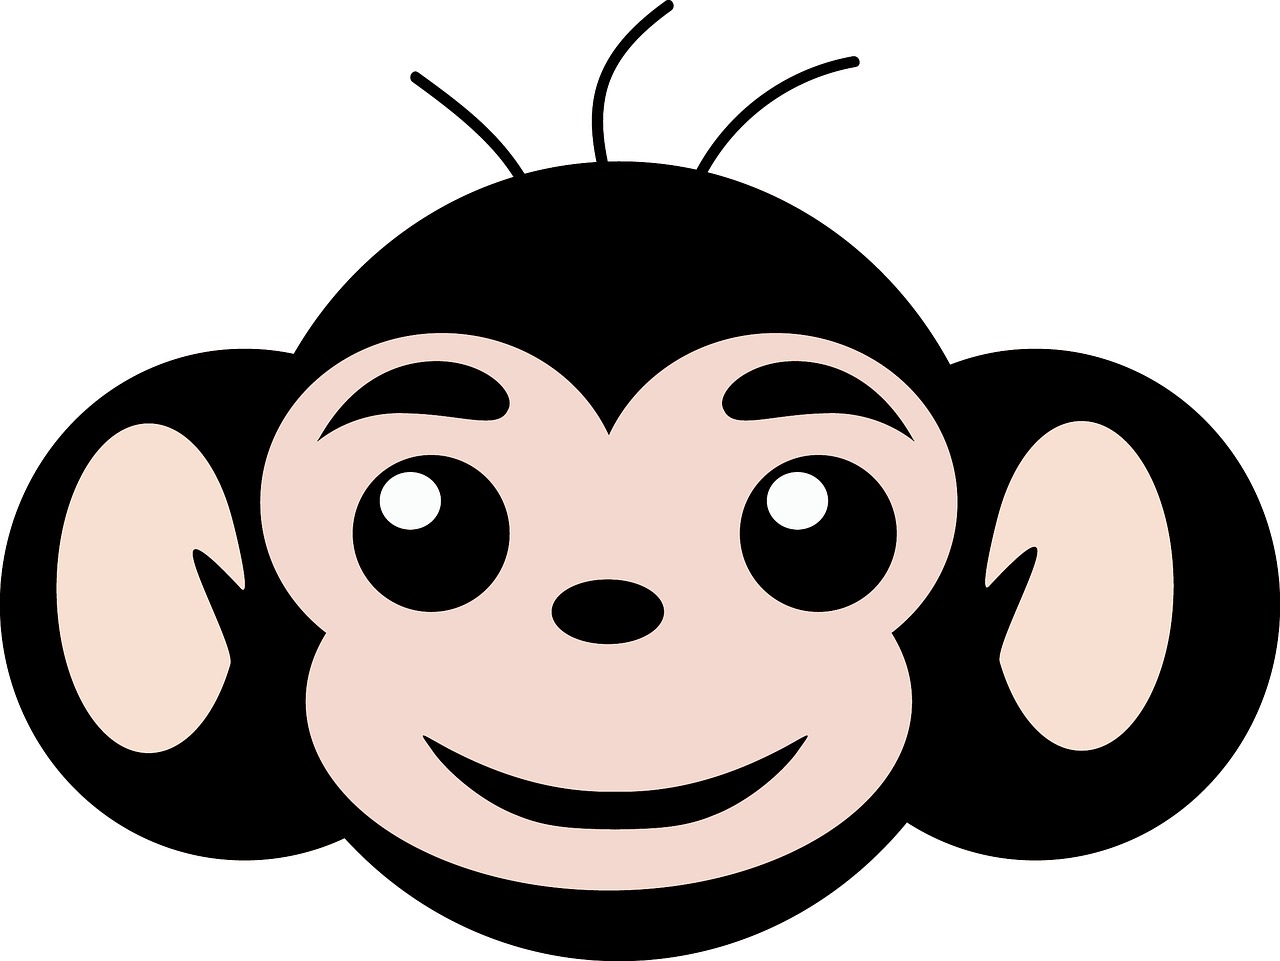 Beždžionė, Paprasta Beždžionė, Beždžionė, Nemokamos Nuotraukos,  Nemokama Licenzija